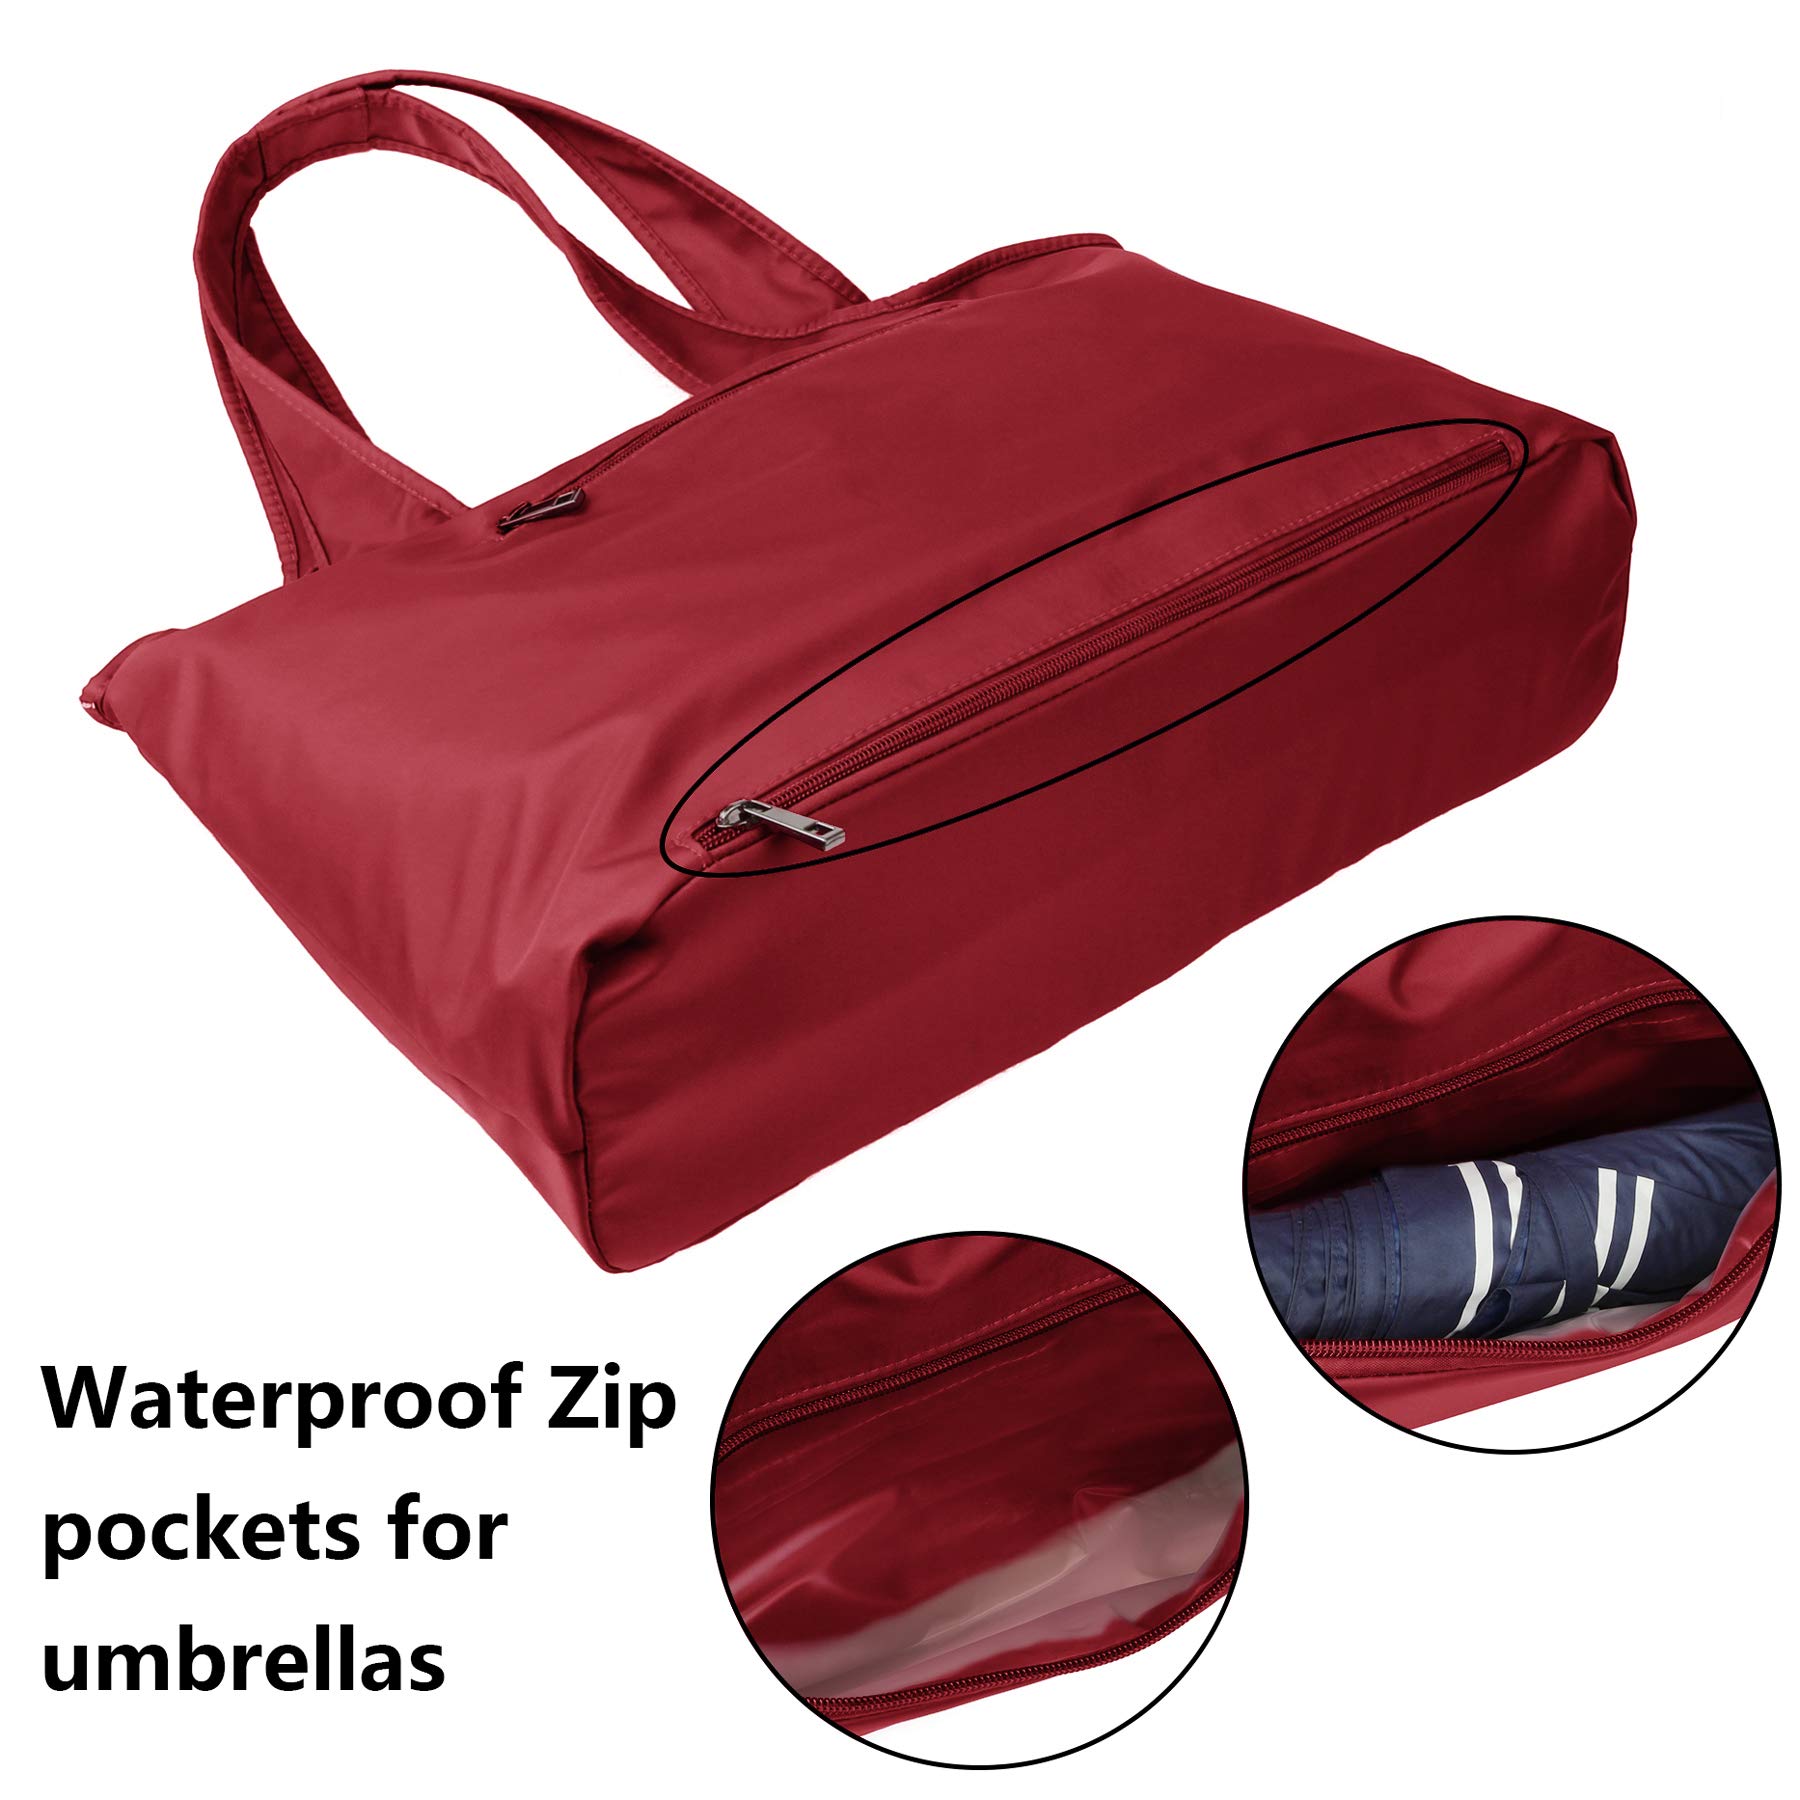 ZOOEASS Women Fashion Large Tote Shoulder Handbag Waterproof Tote Bag Multi-function Nylon Travel Shoulder